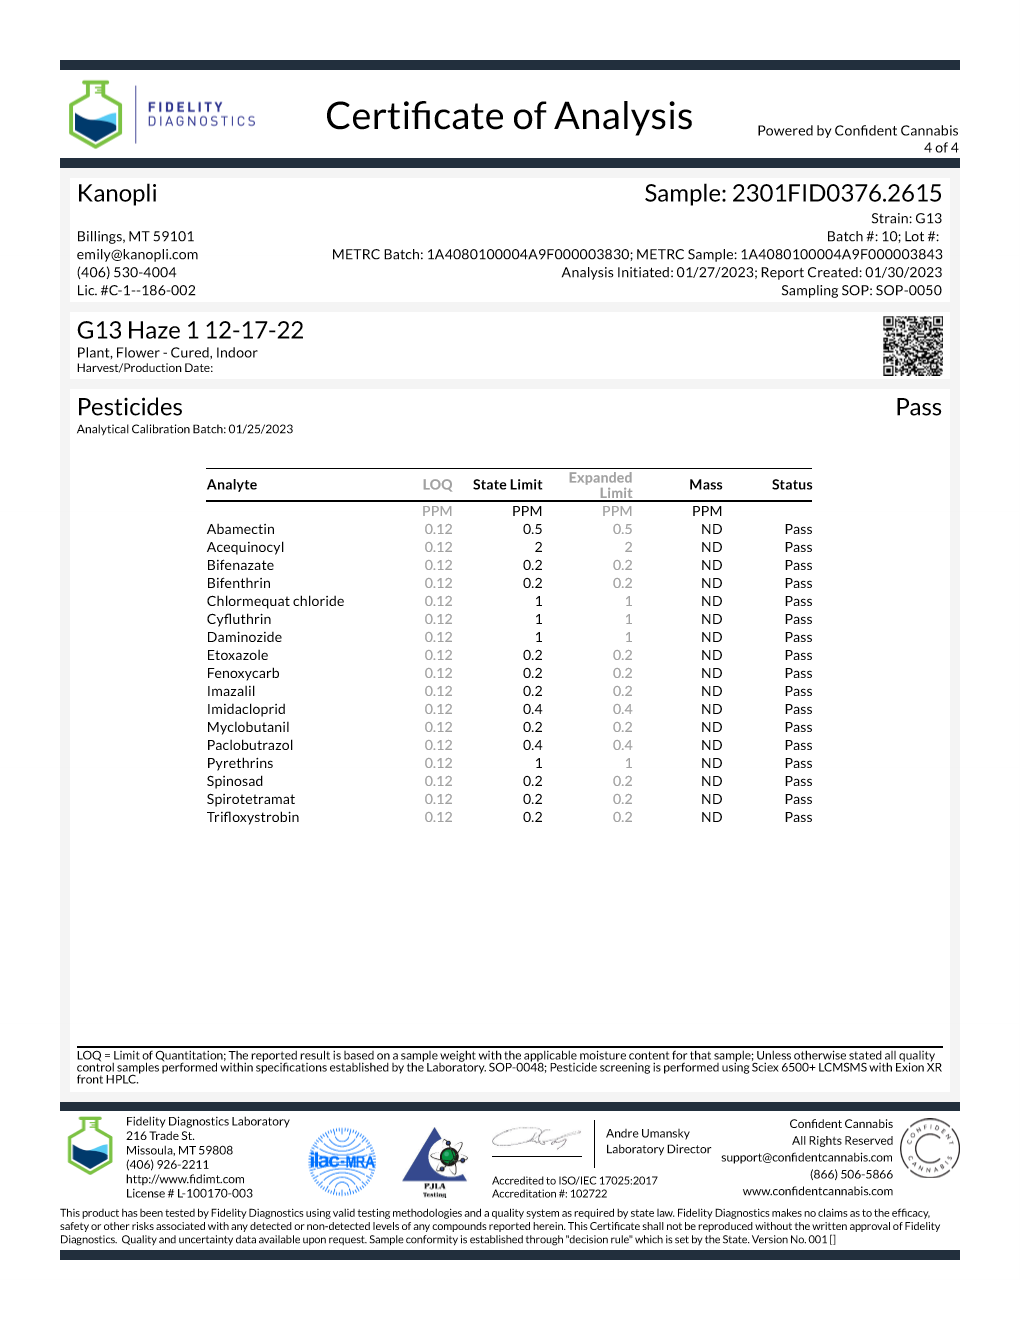 G13 Haze #1 - Hybrid shake (19.06% THC) Dec. 2022 (5 grams)